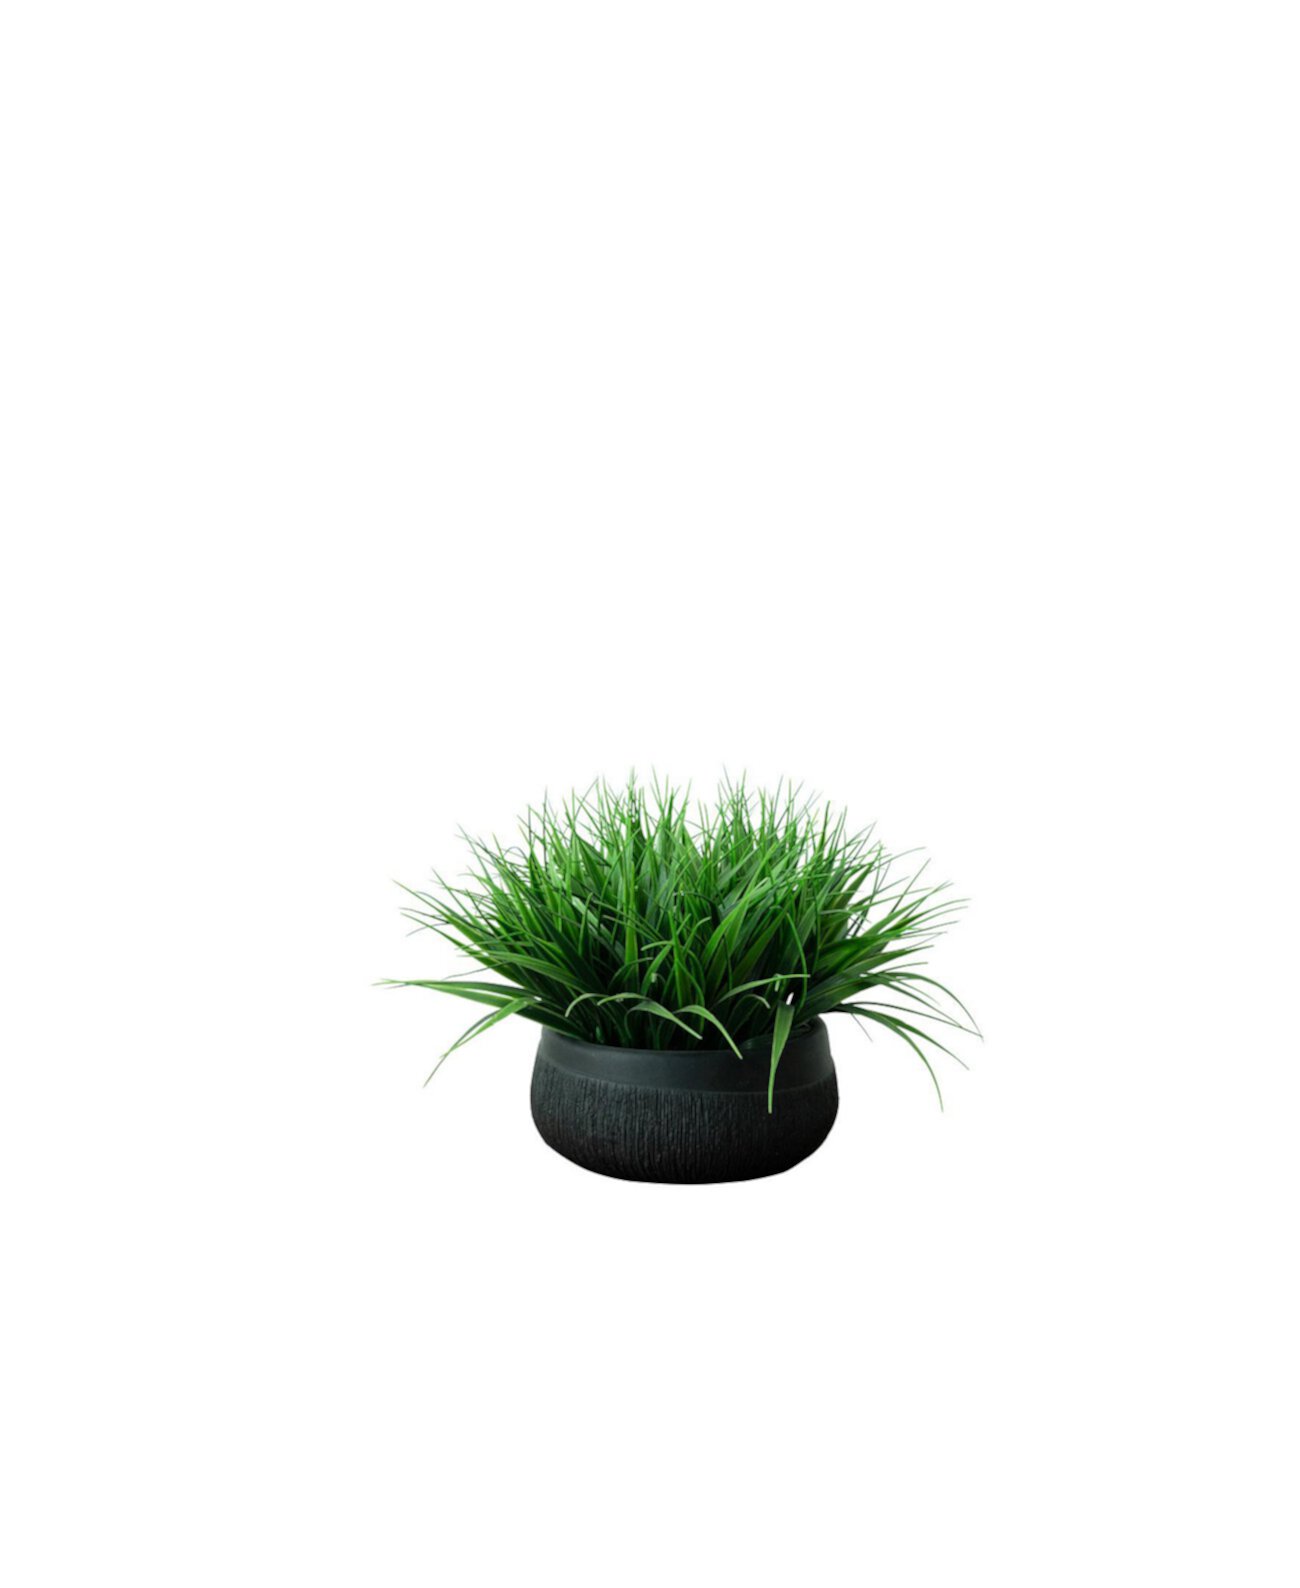 Desktop Artificial Grass Bowl in Decorative Pot Nature's Elements